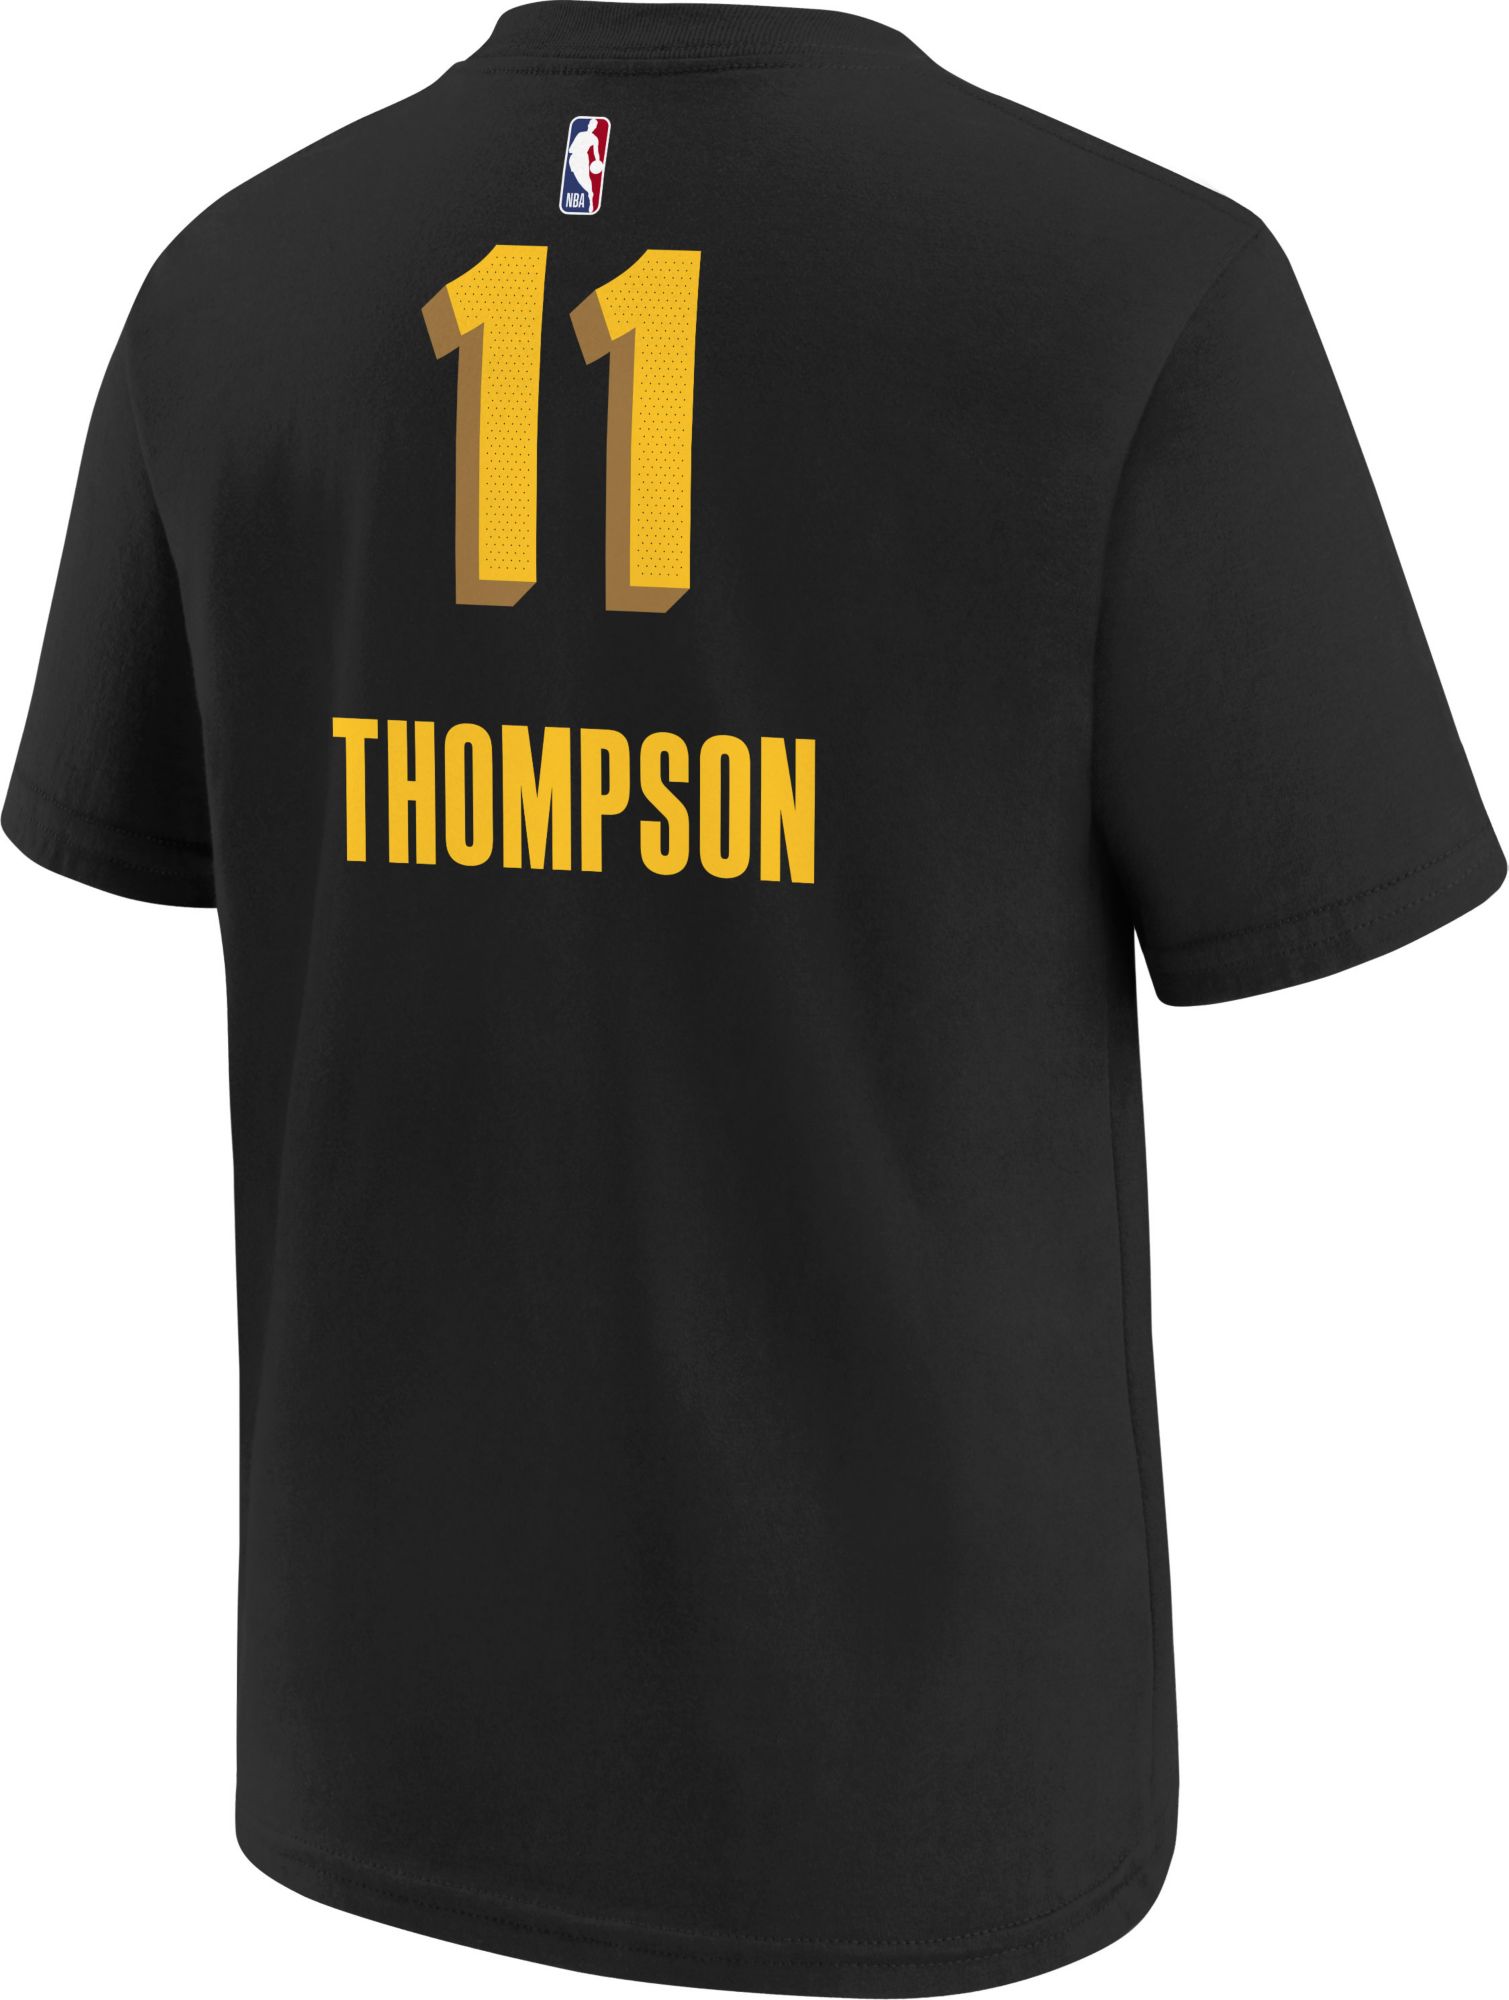 Warriors Klay Thompson black jersey